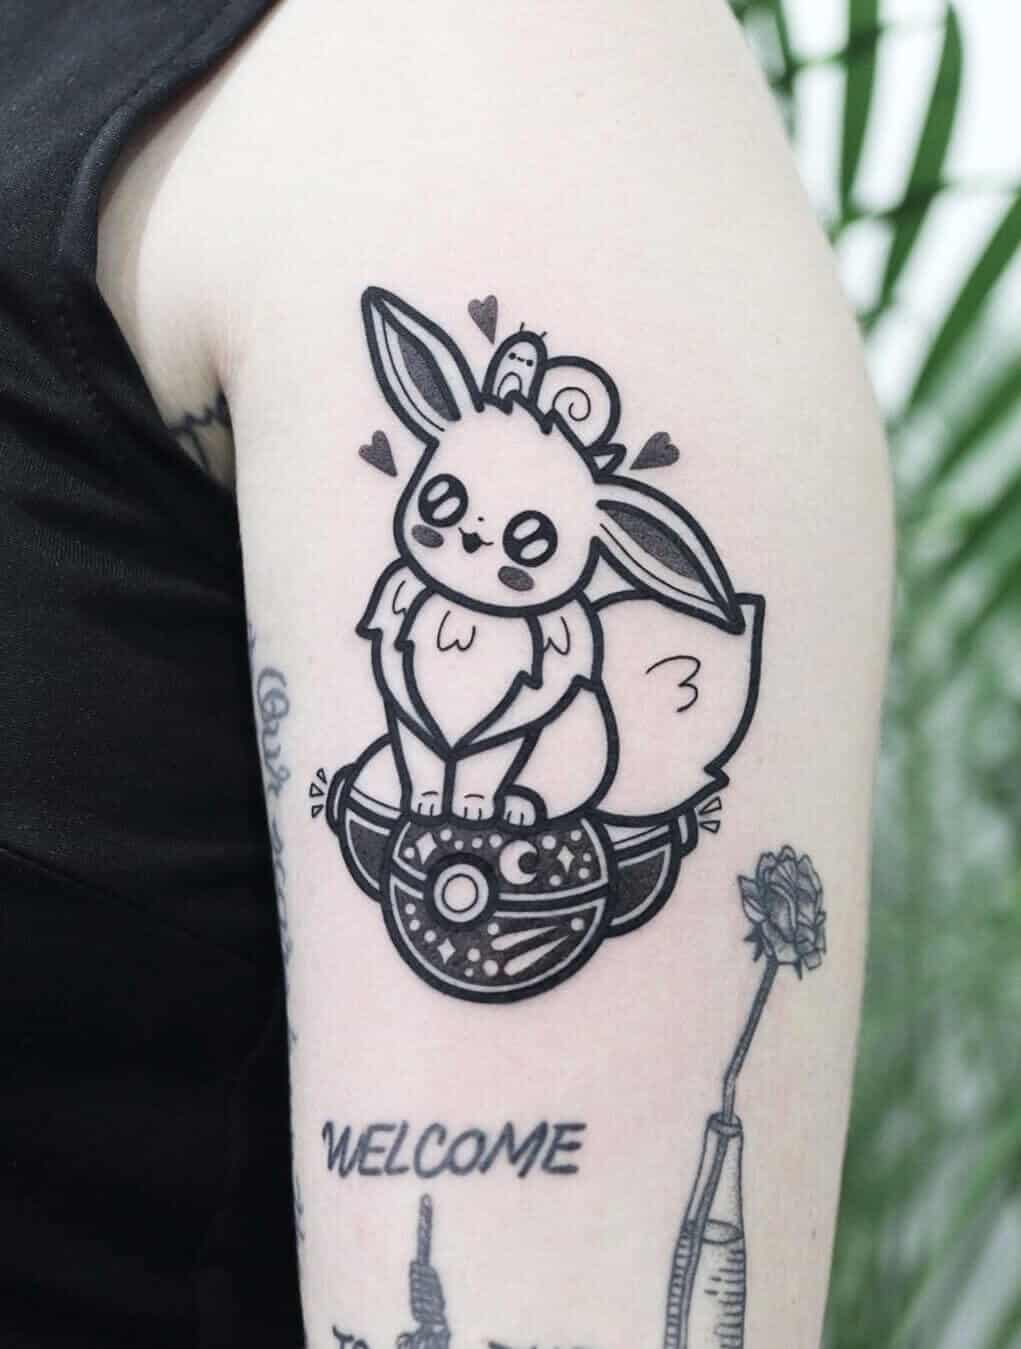 Cute Eevee tattoo idea